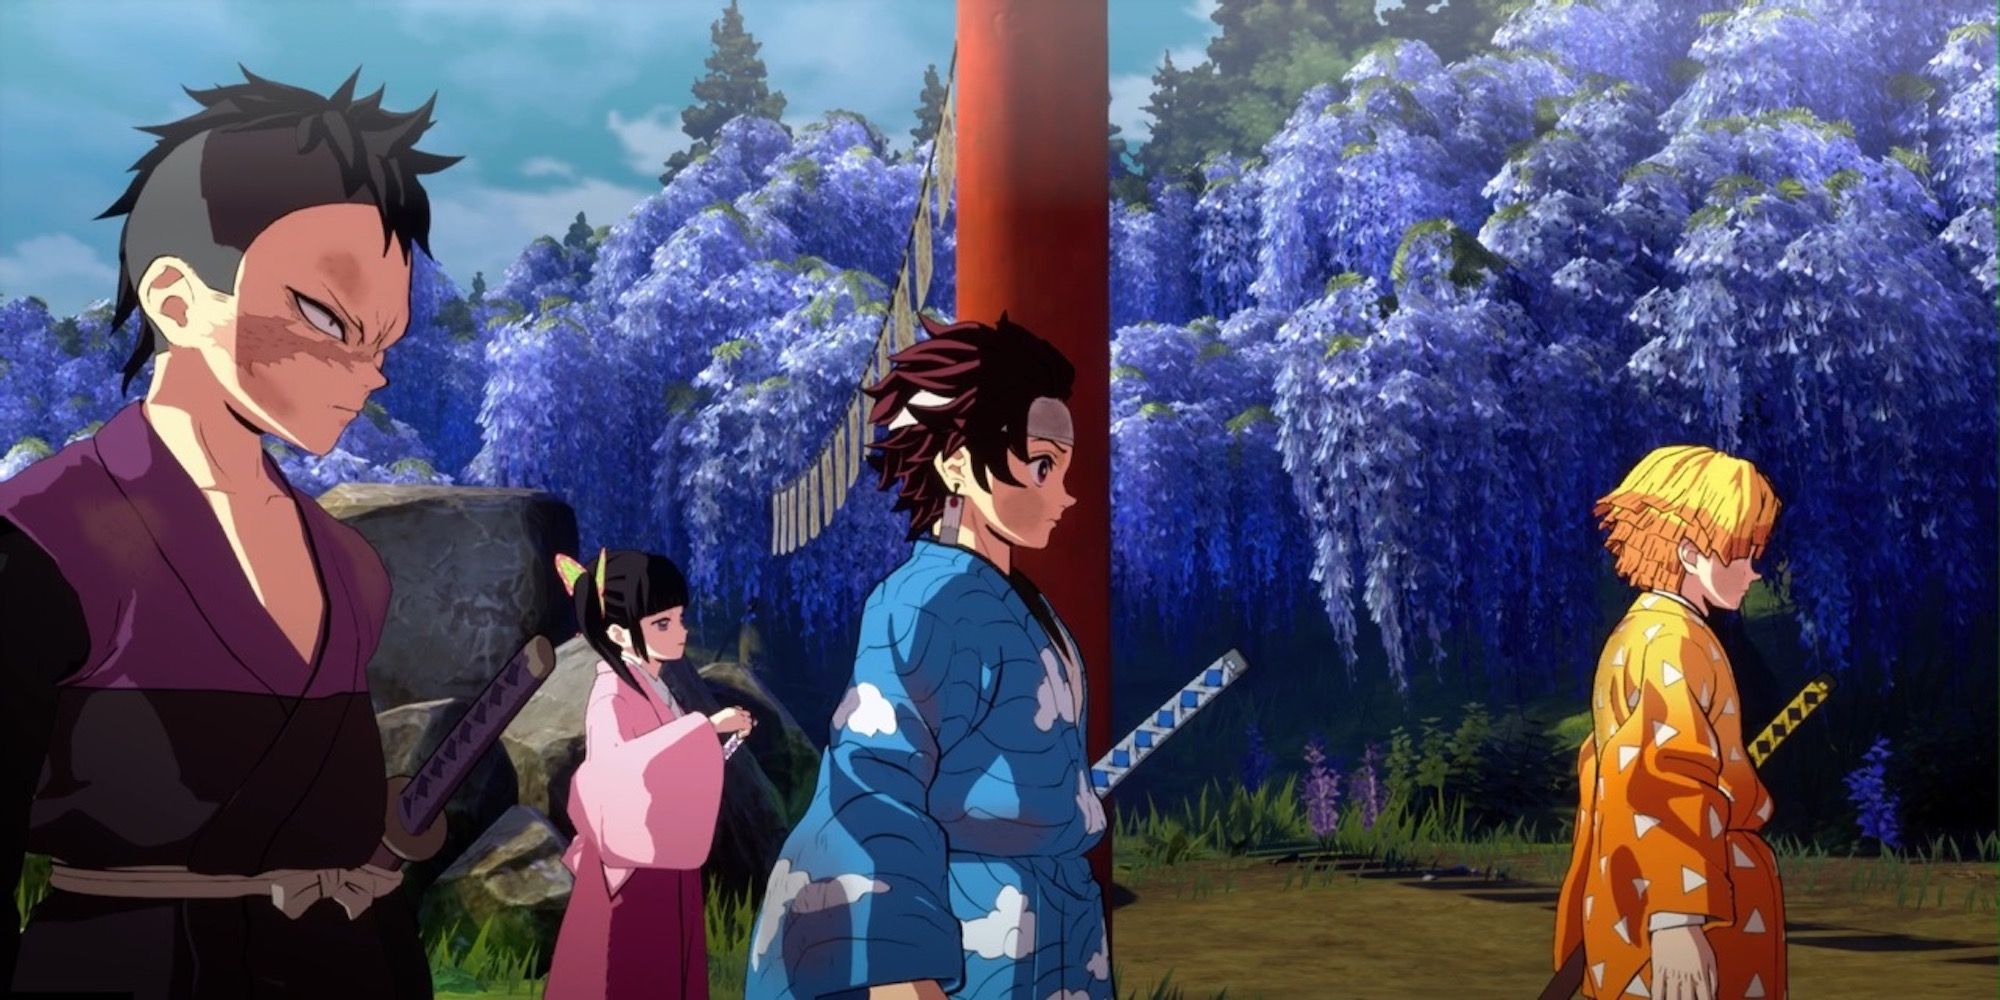 A scene featuring multiple characters from Demon Slayer-Kimetsu no Yaiba – The Hinokami Chronicles